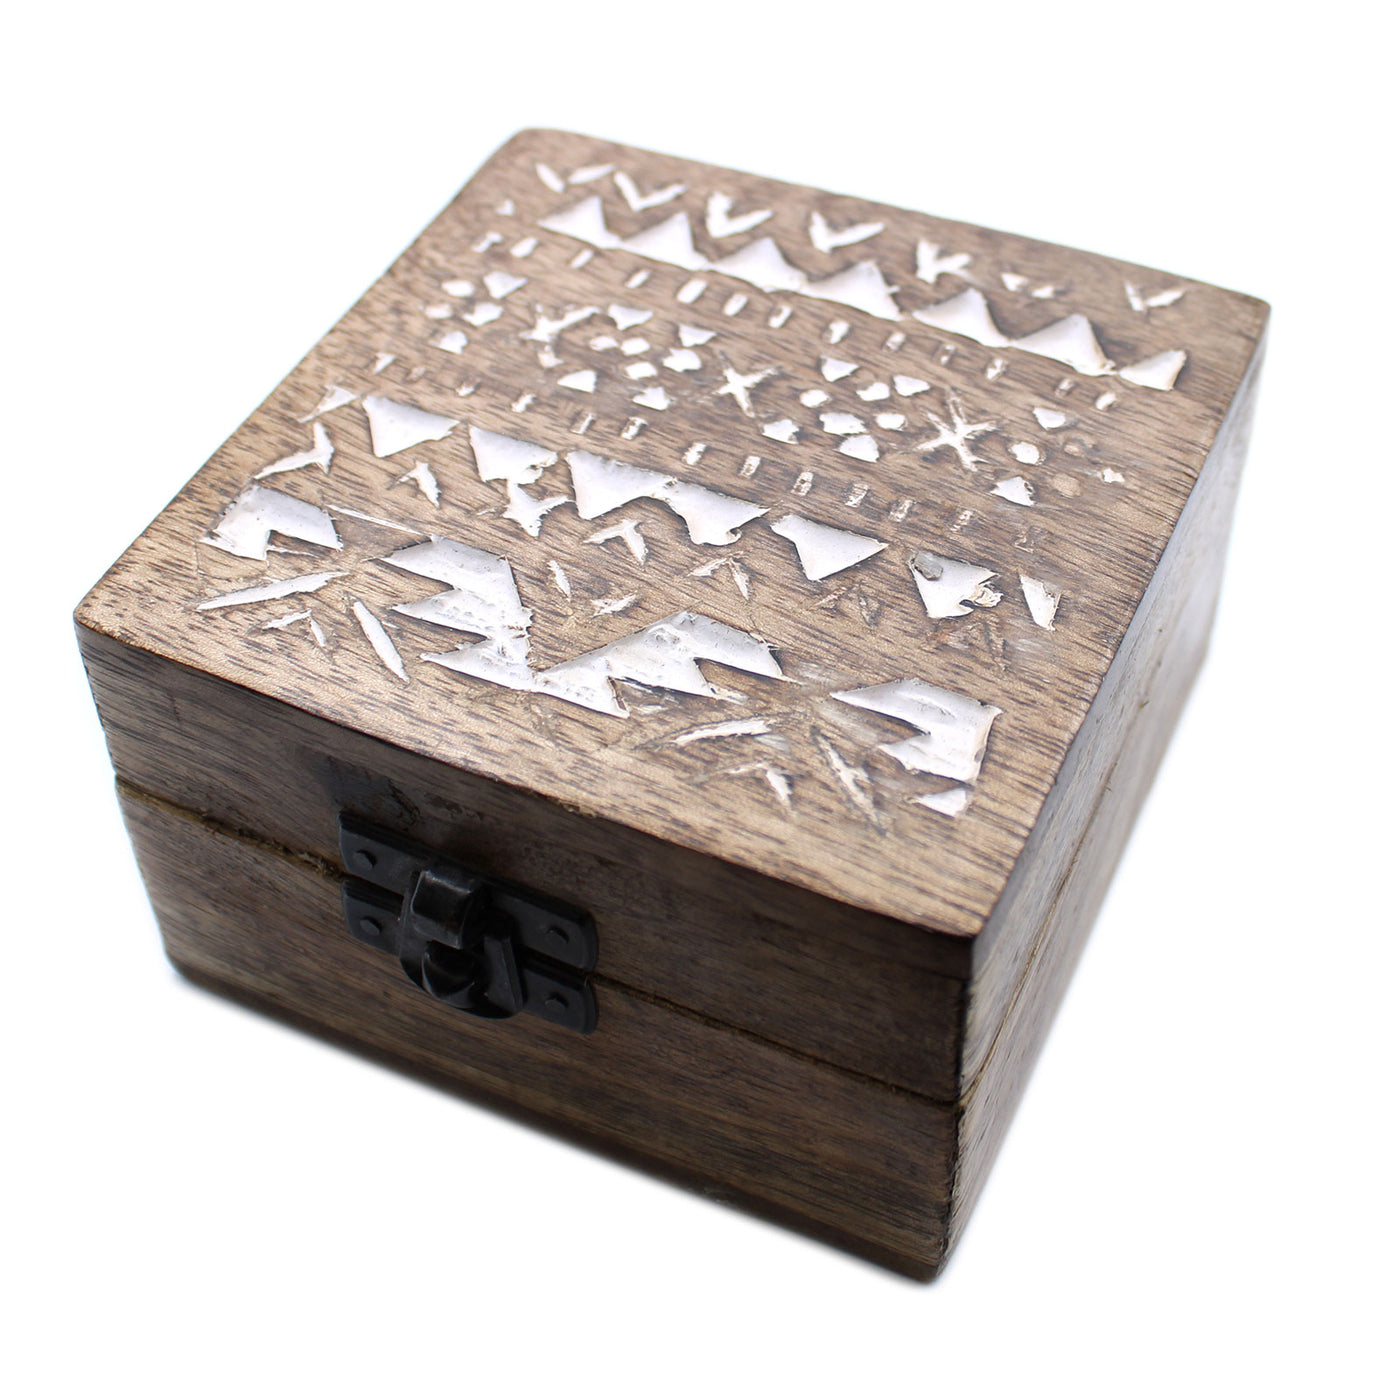 White Washed Wooden Storage Box - Slavic Design 4 x 4 Inch. 